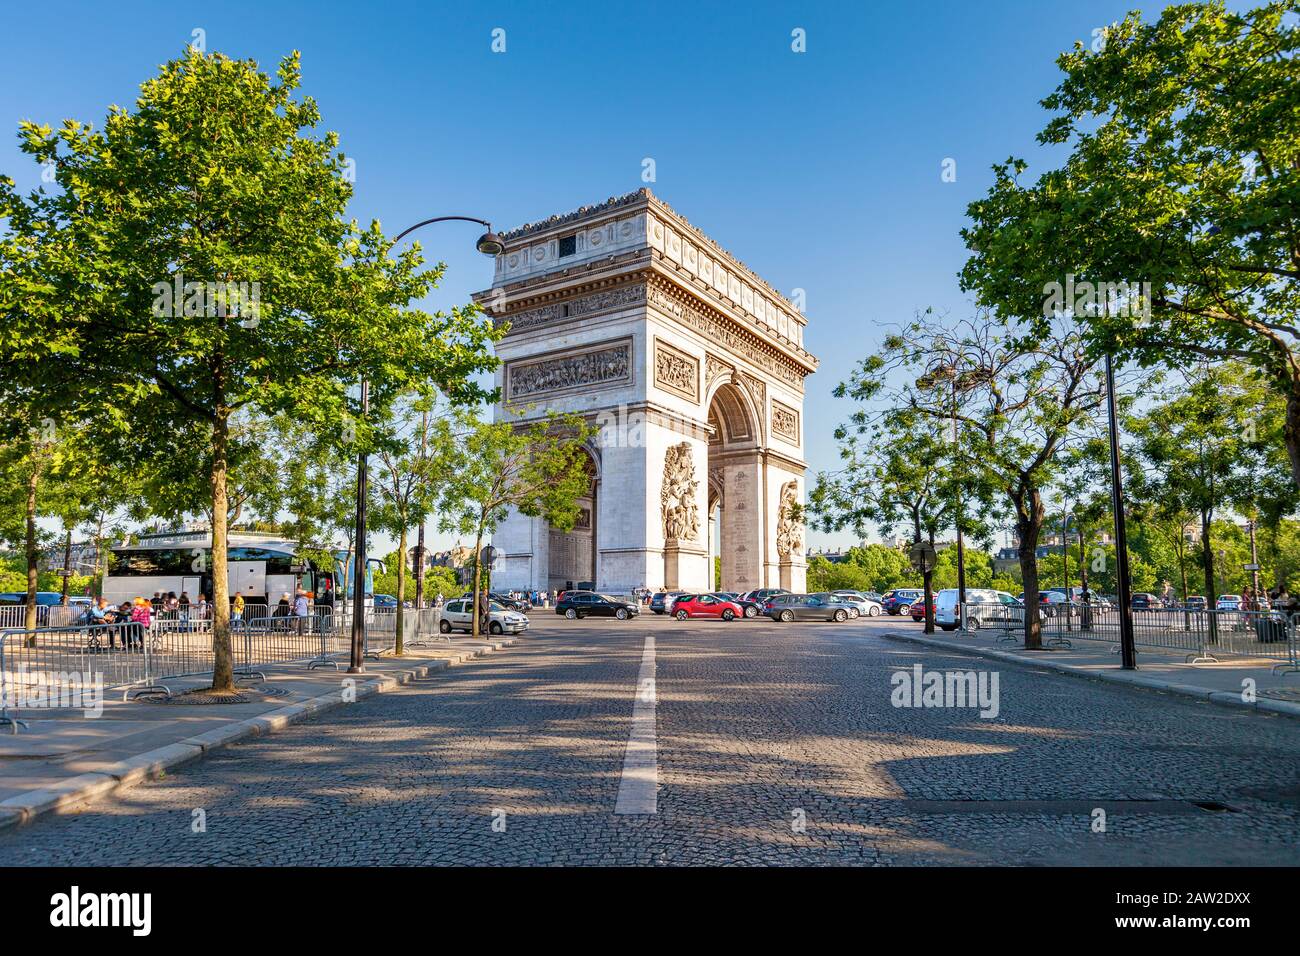 Arc de Triomphe located in Paris, France Stock Photo